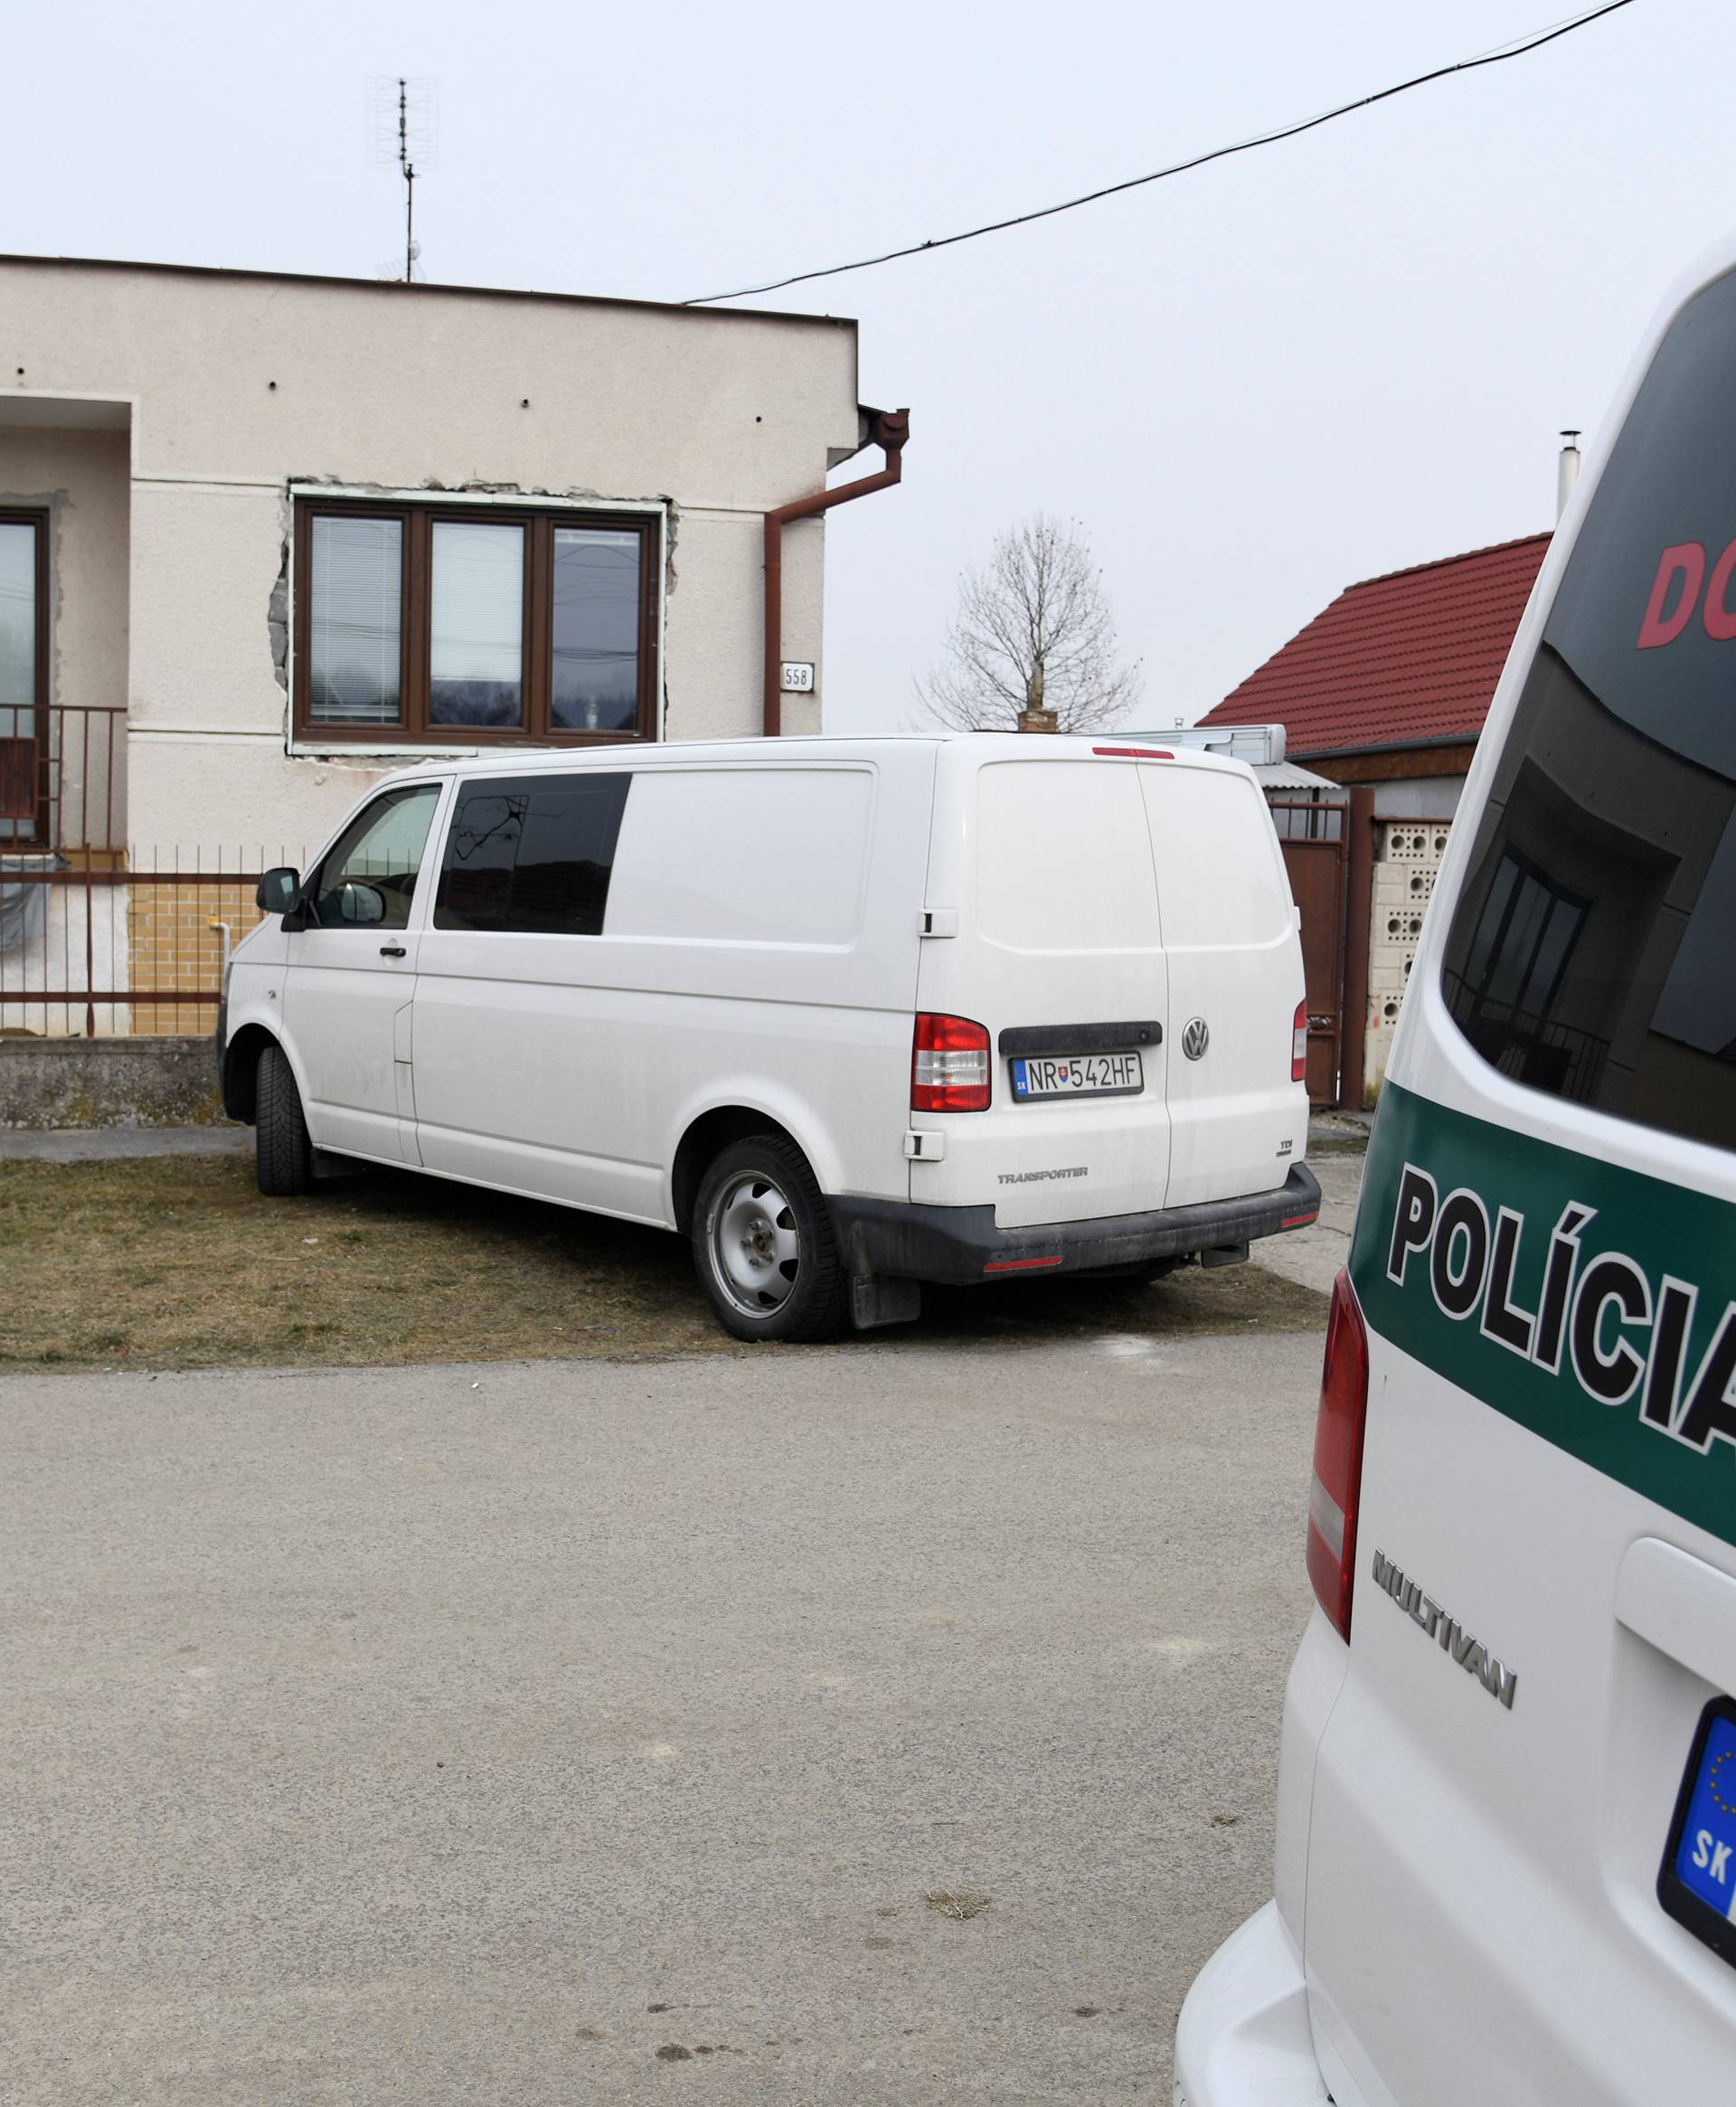 The house where Slovak investigative journalist Jan Kuciak and his girlfriend Martina Kusnirova lived and were murdered is seen in the village of Velka Maca